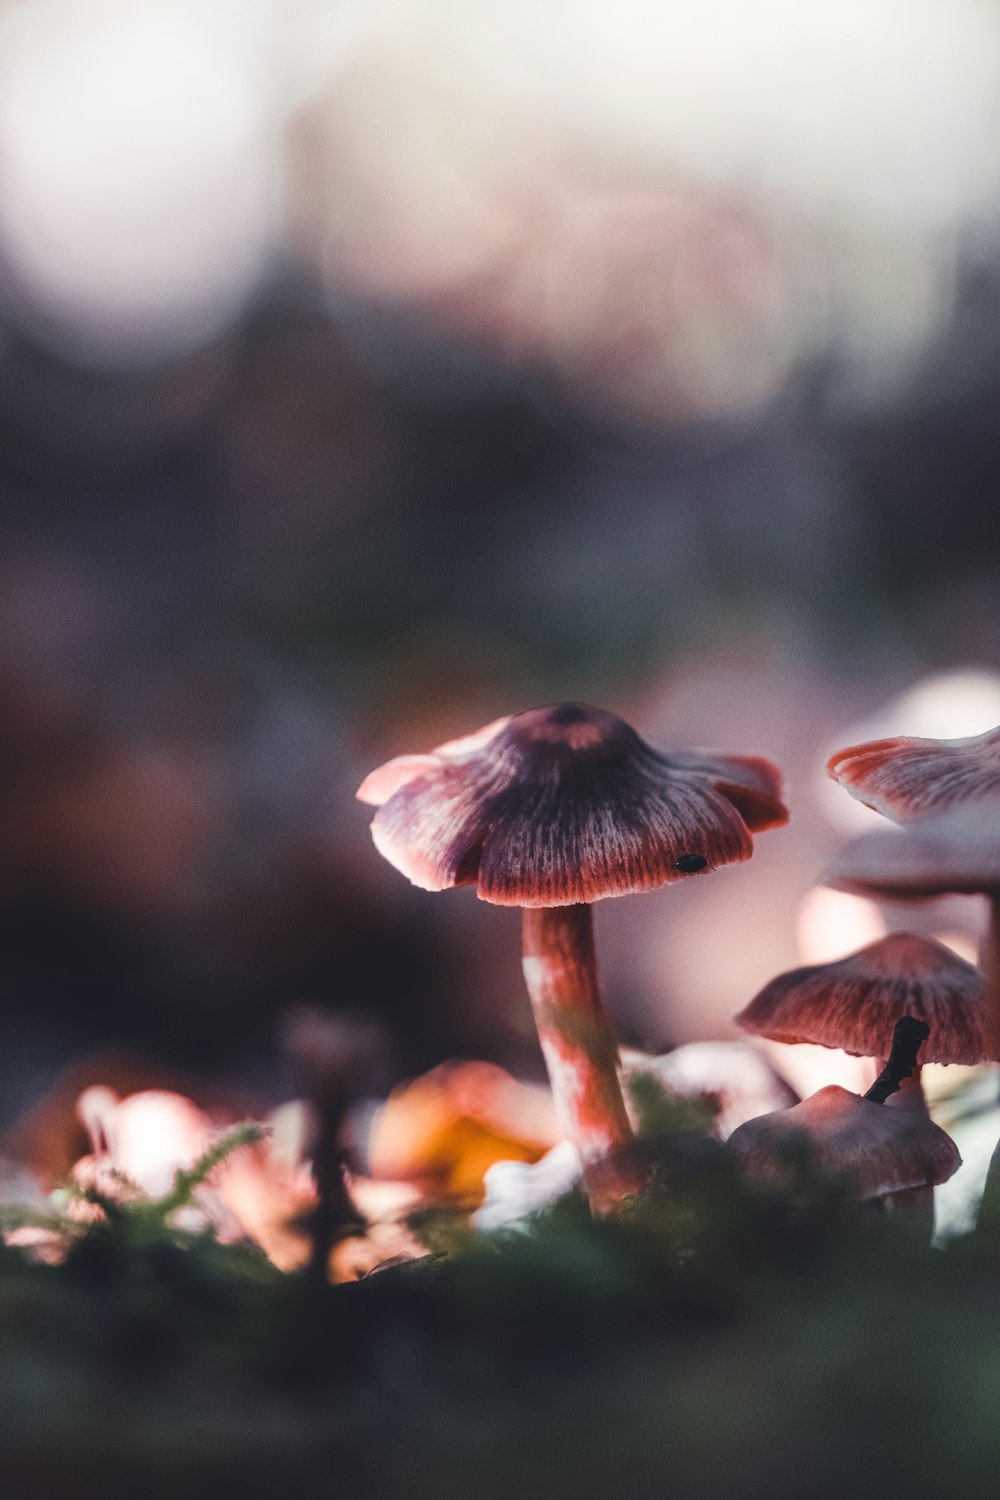 a close up of mushrooms